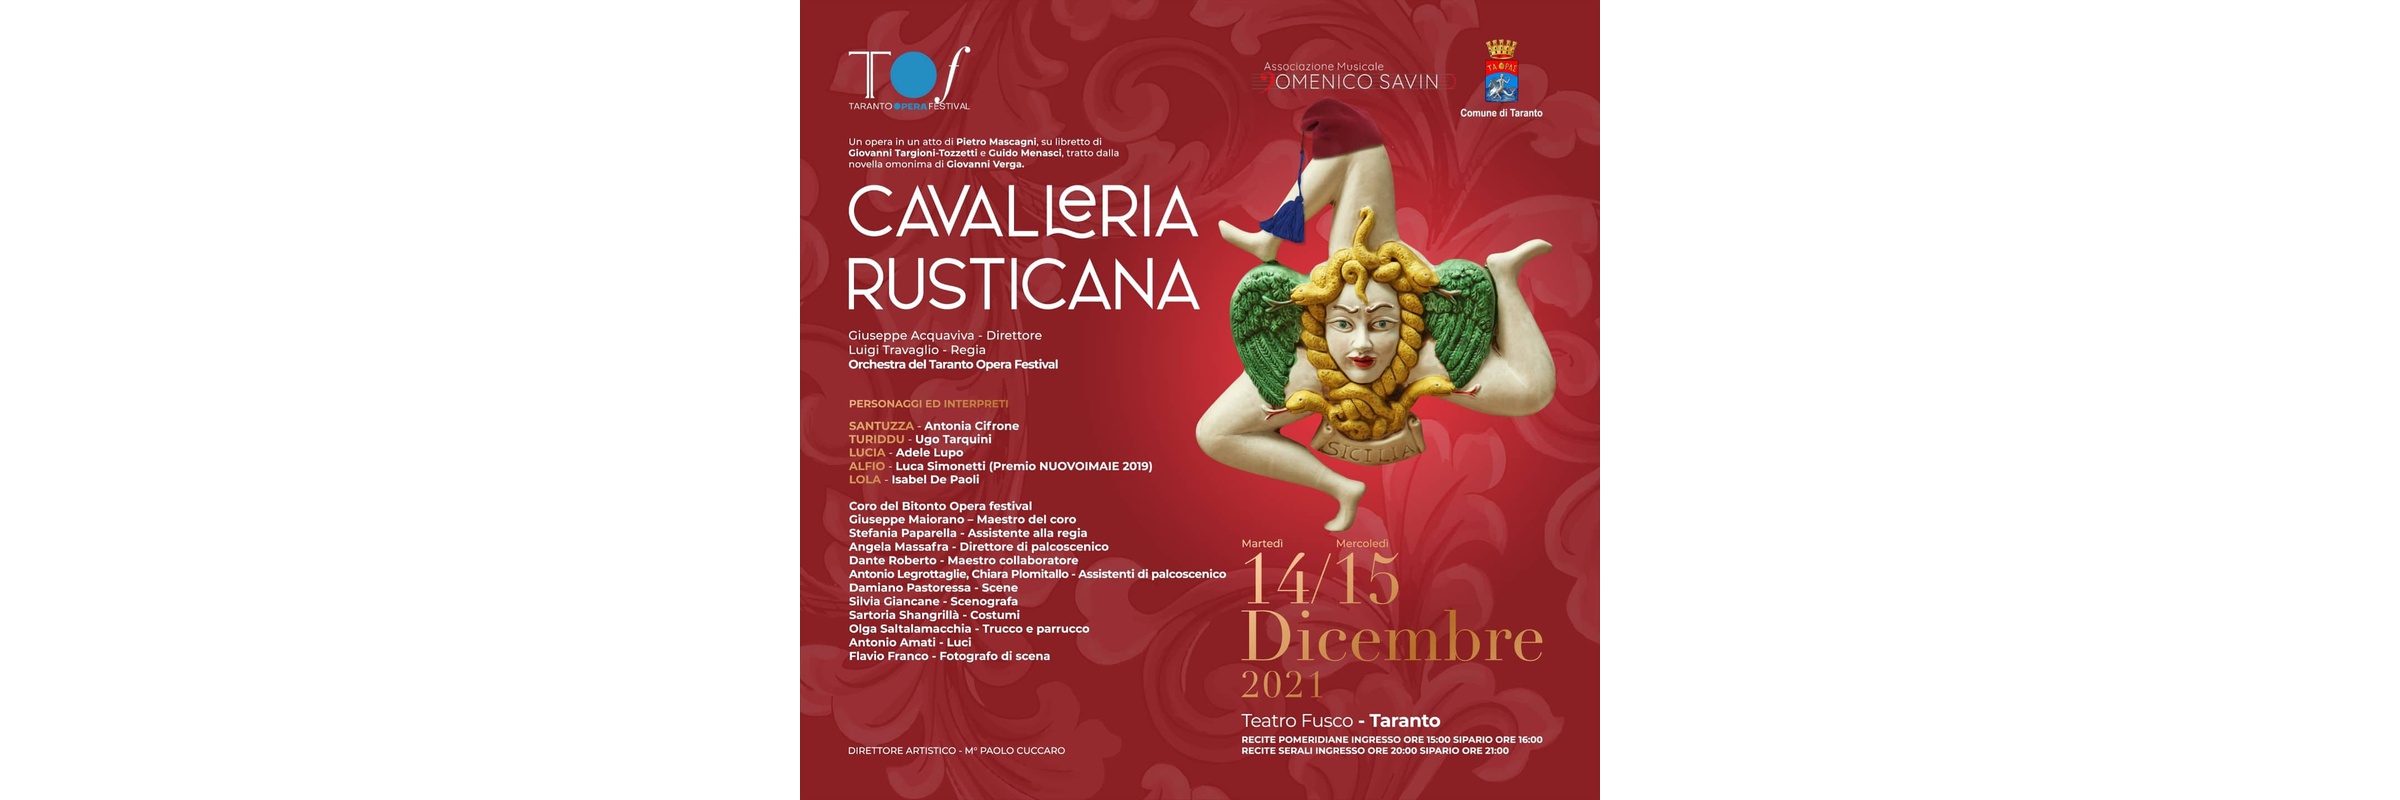 Musical Association Domenico Savino - LIVESTREAM SUOR ANGELICA AND CAVALLIERA RUSTICANA